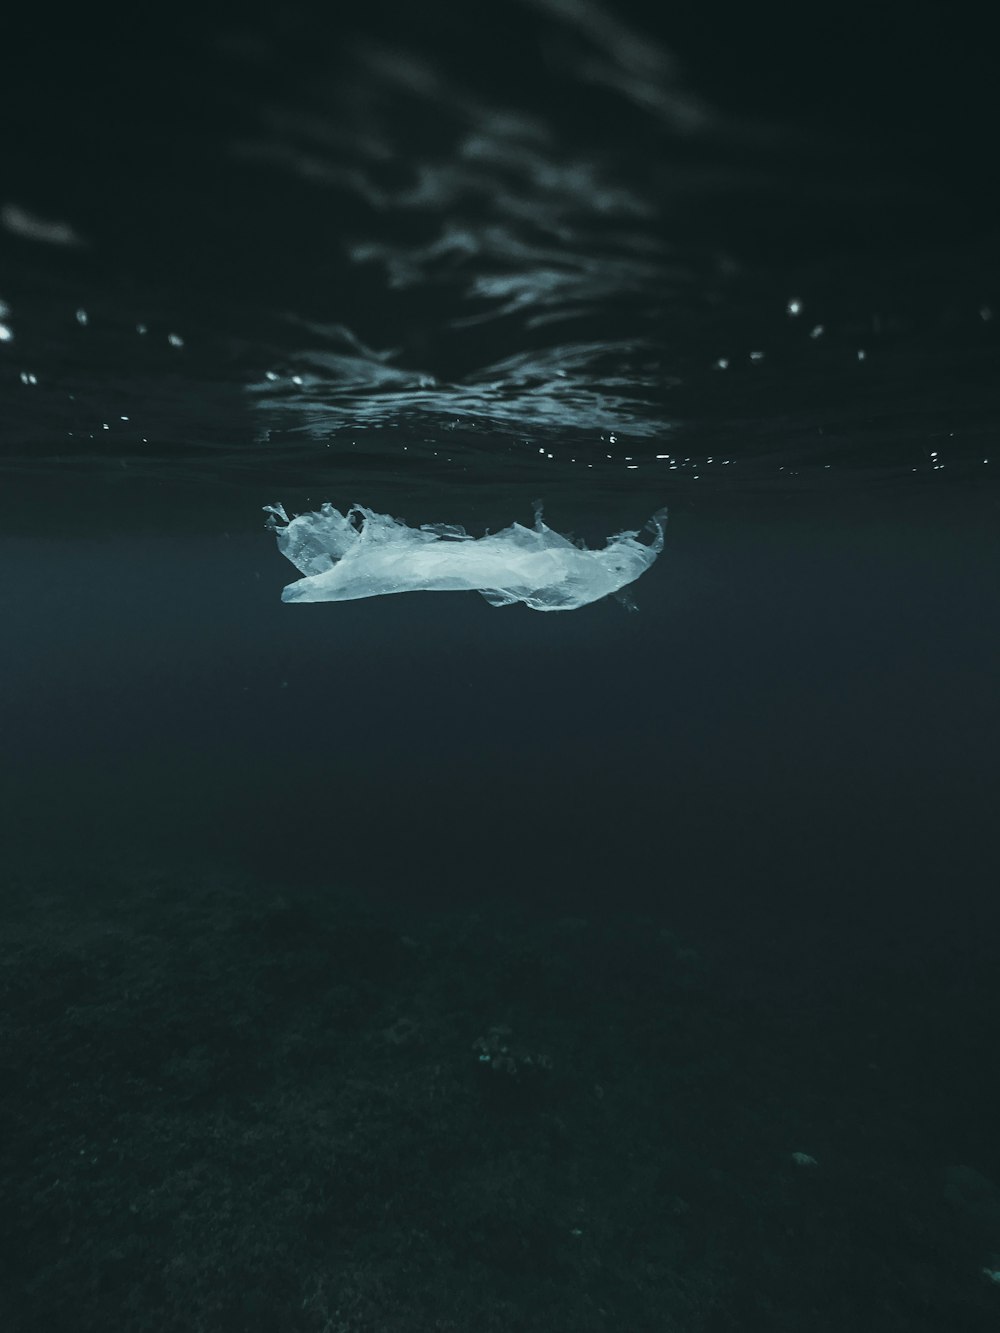 woman in white dress in water